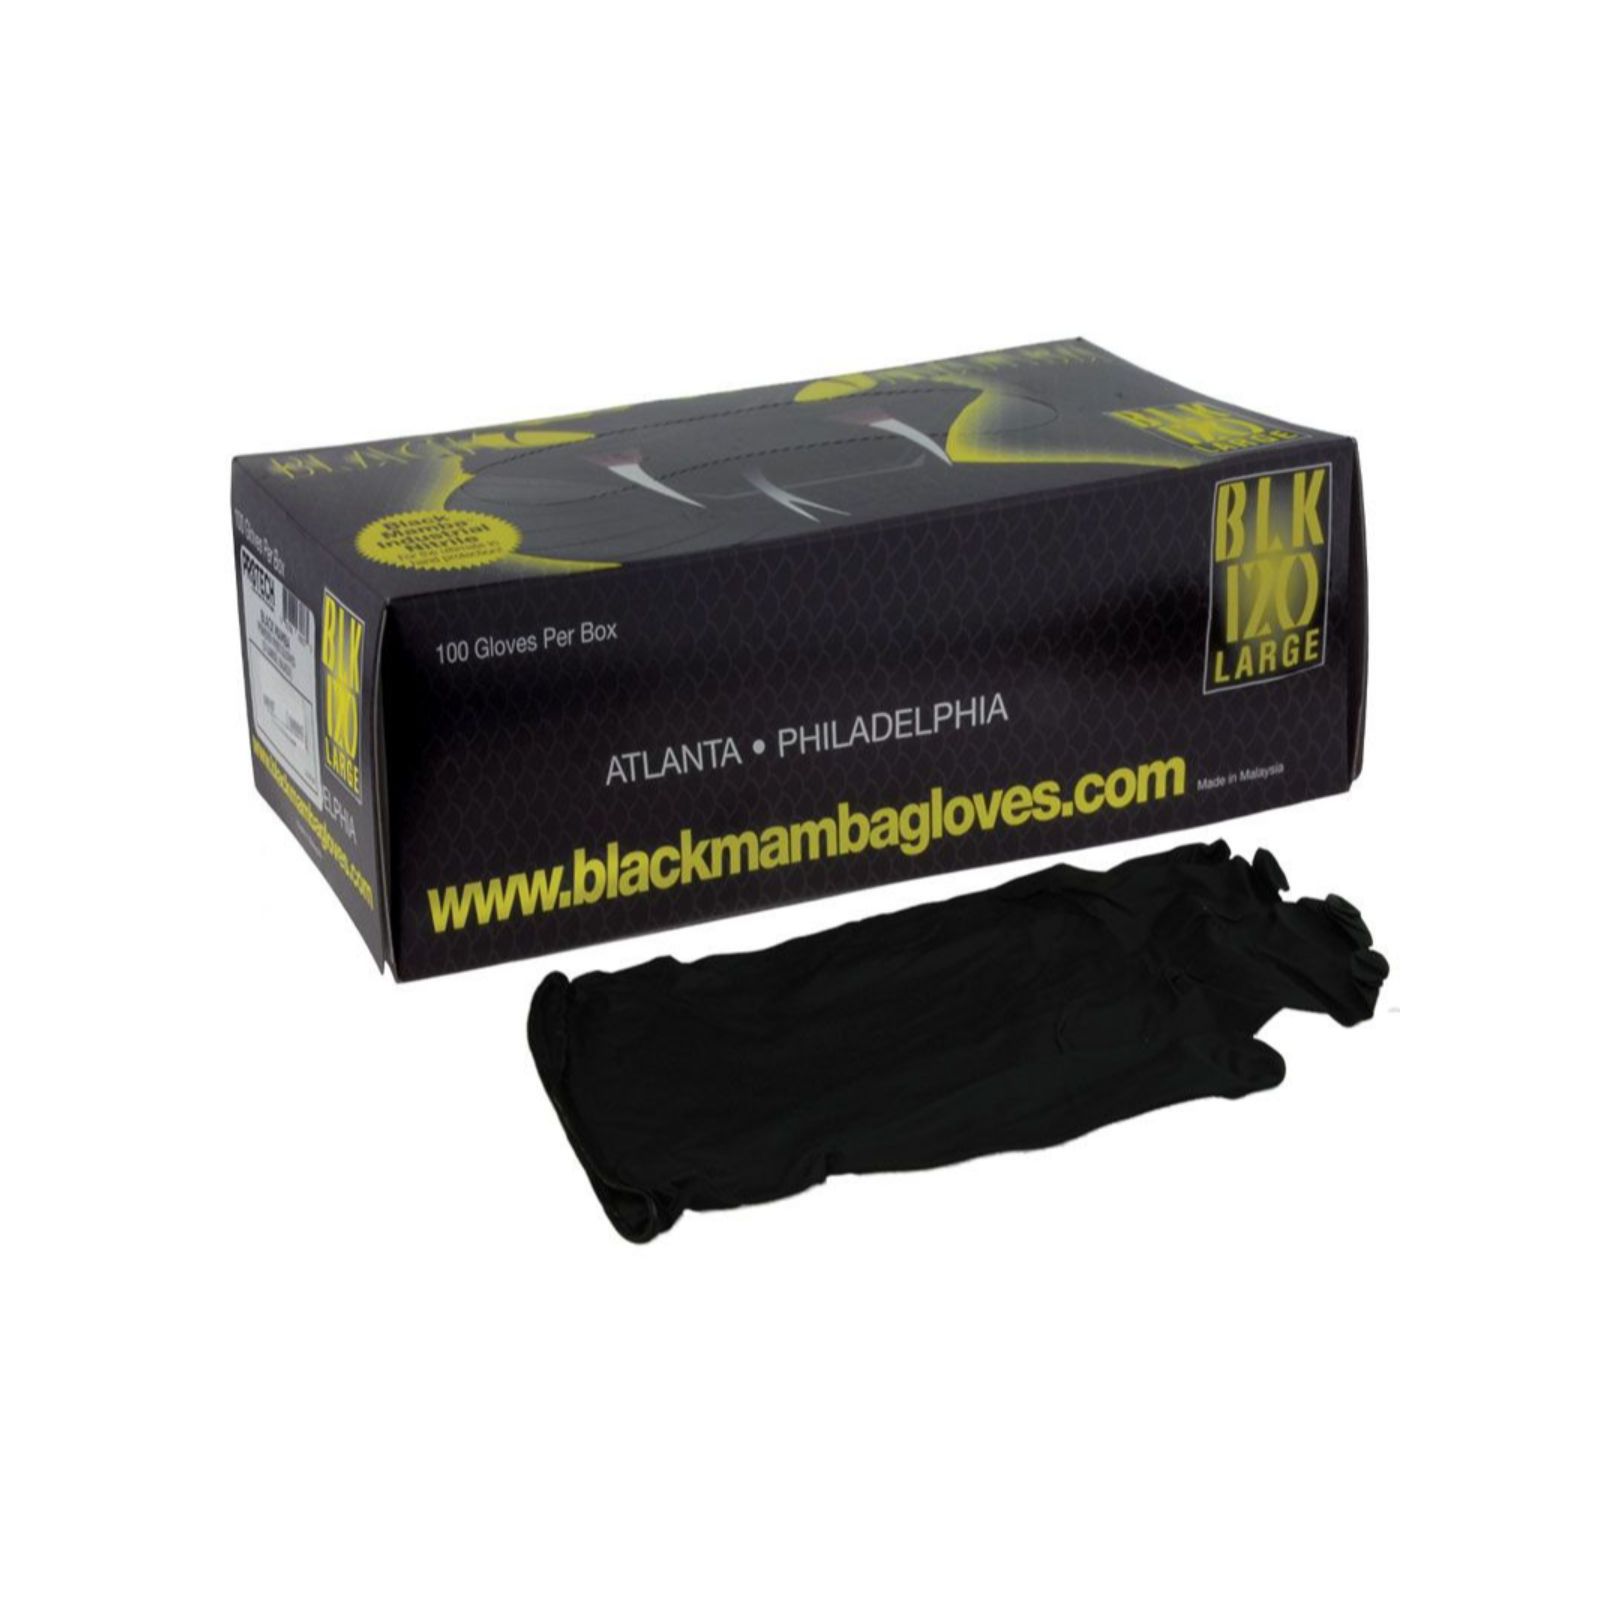 ShuBee 849166 - Gloves - Black Mamba Powderfree - Textured - L (Box of 100)